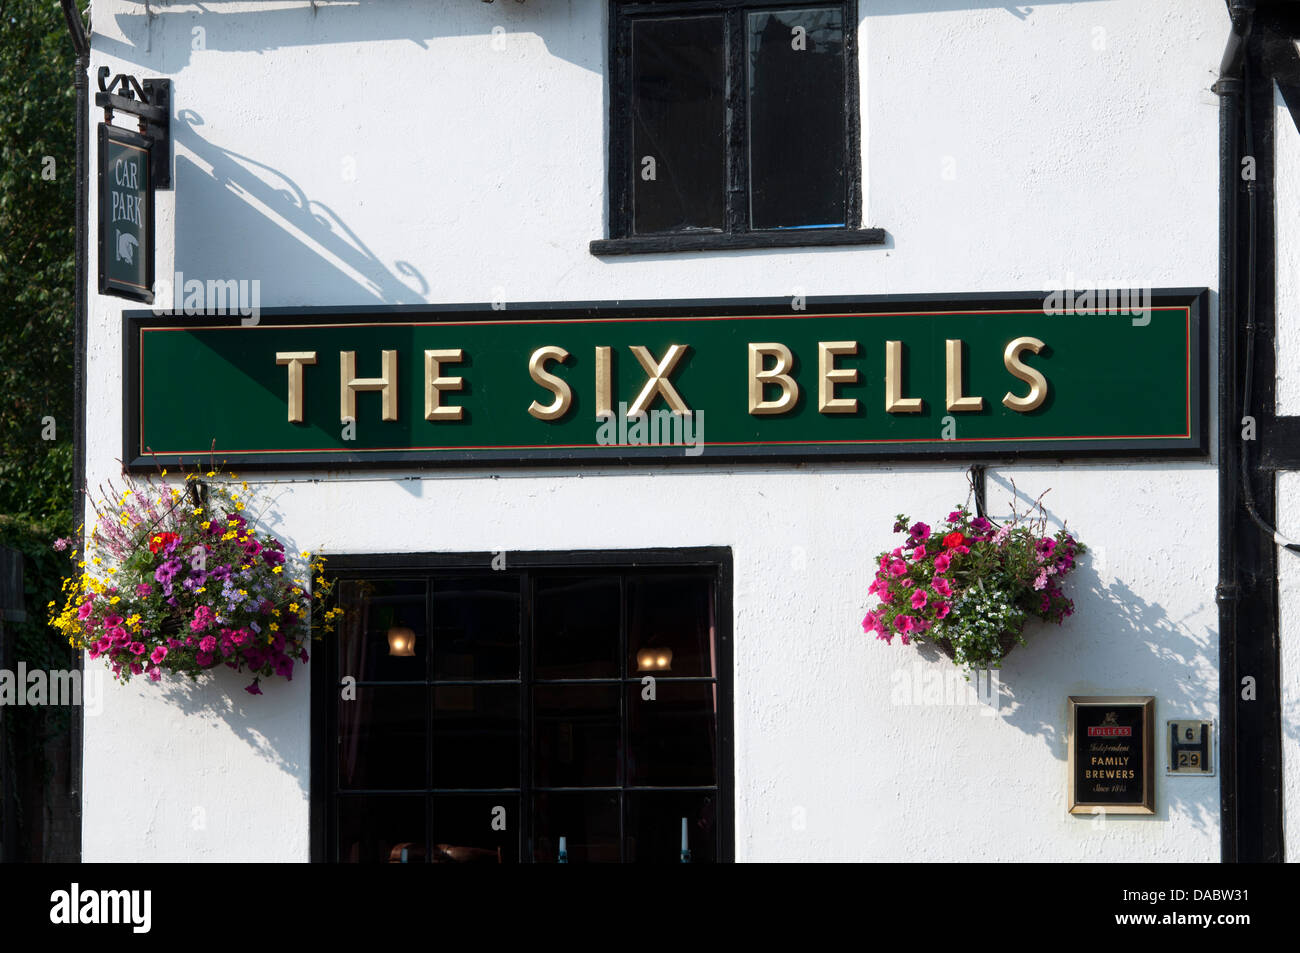 The Six Bells pub, Thame, Oxfordshire, UK Stock Photo